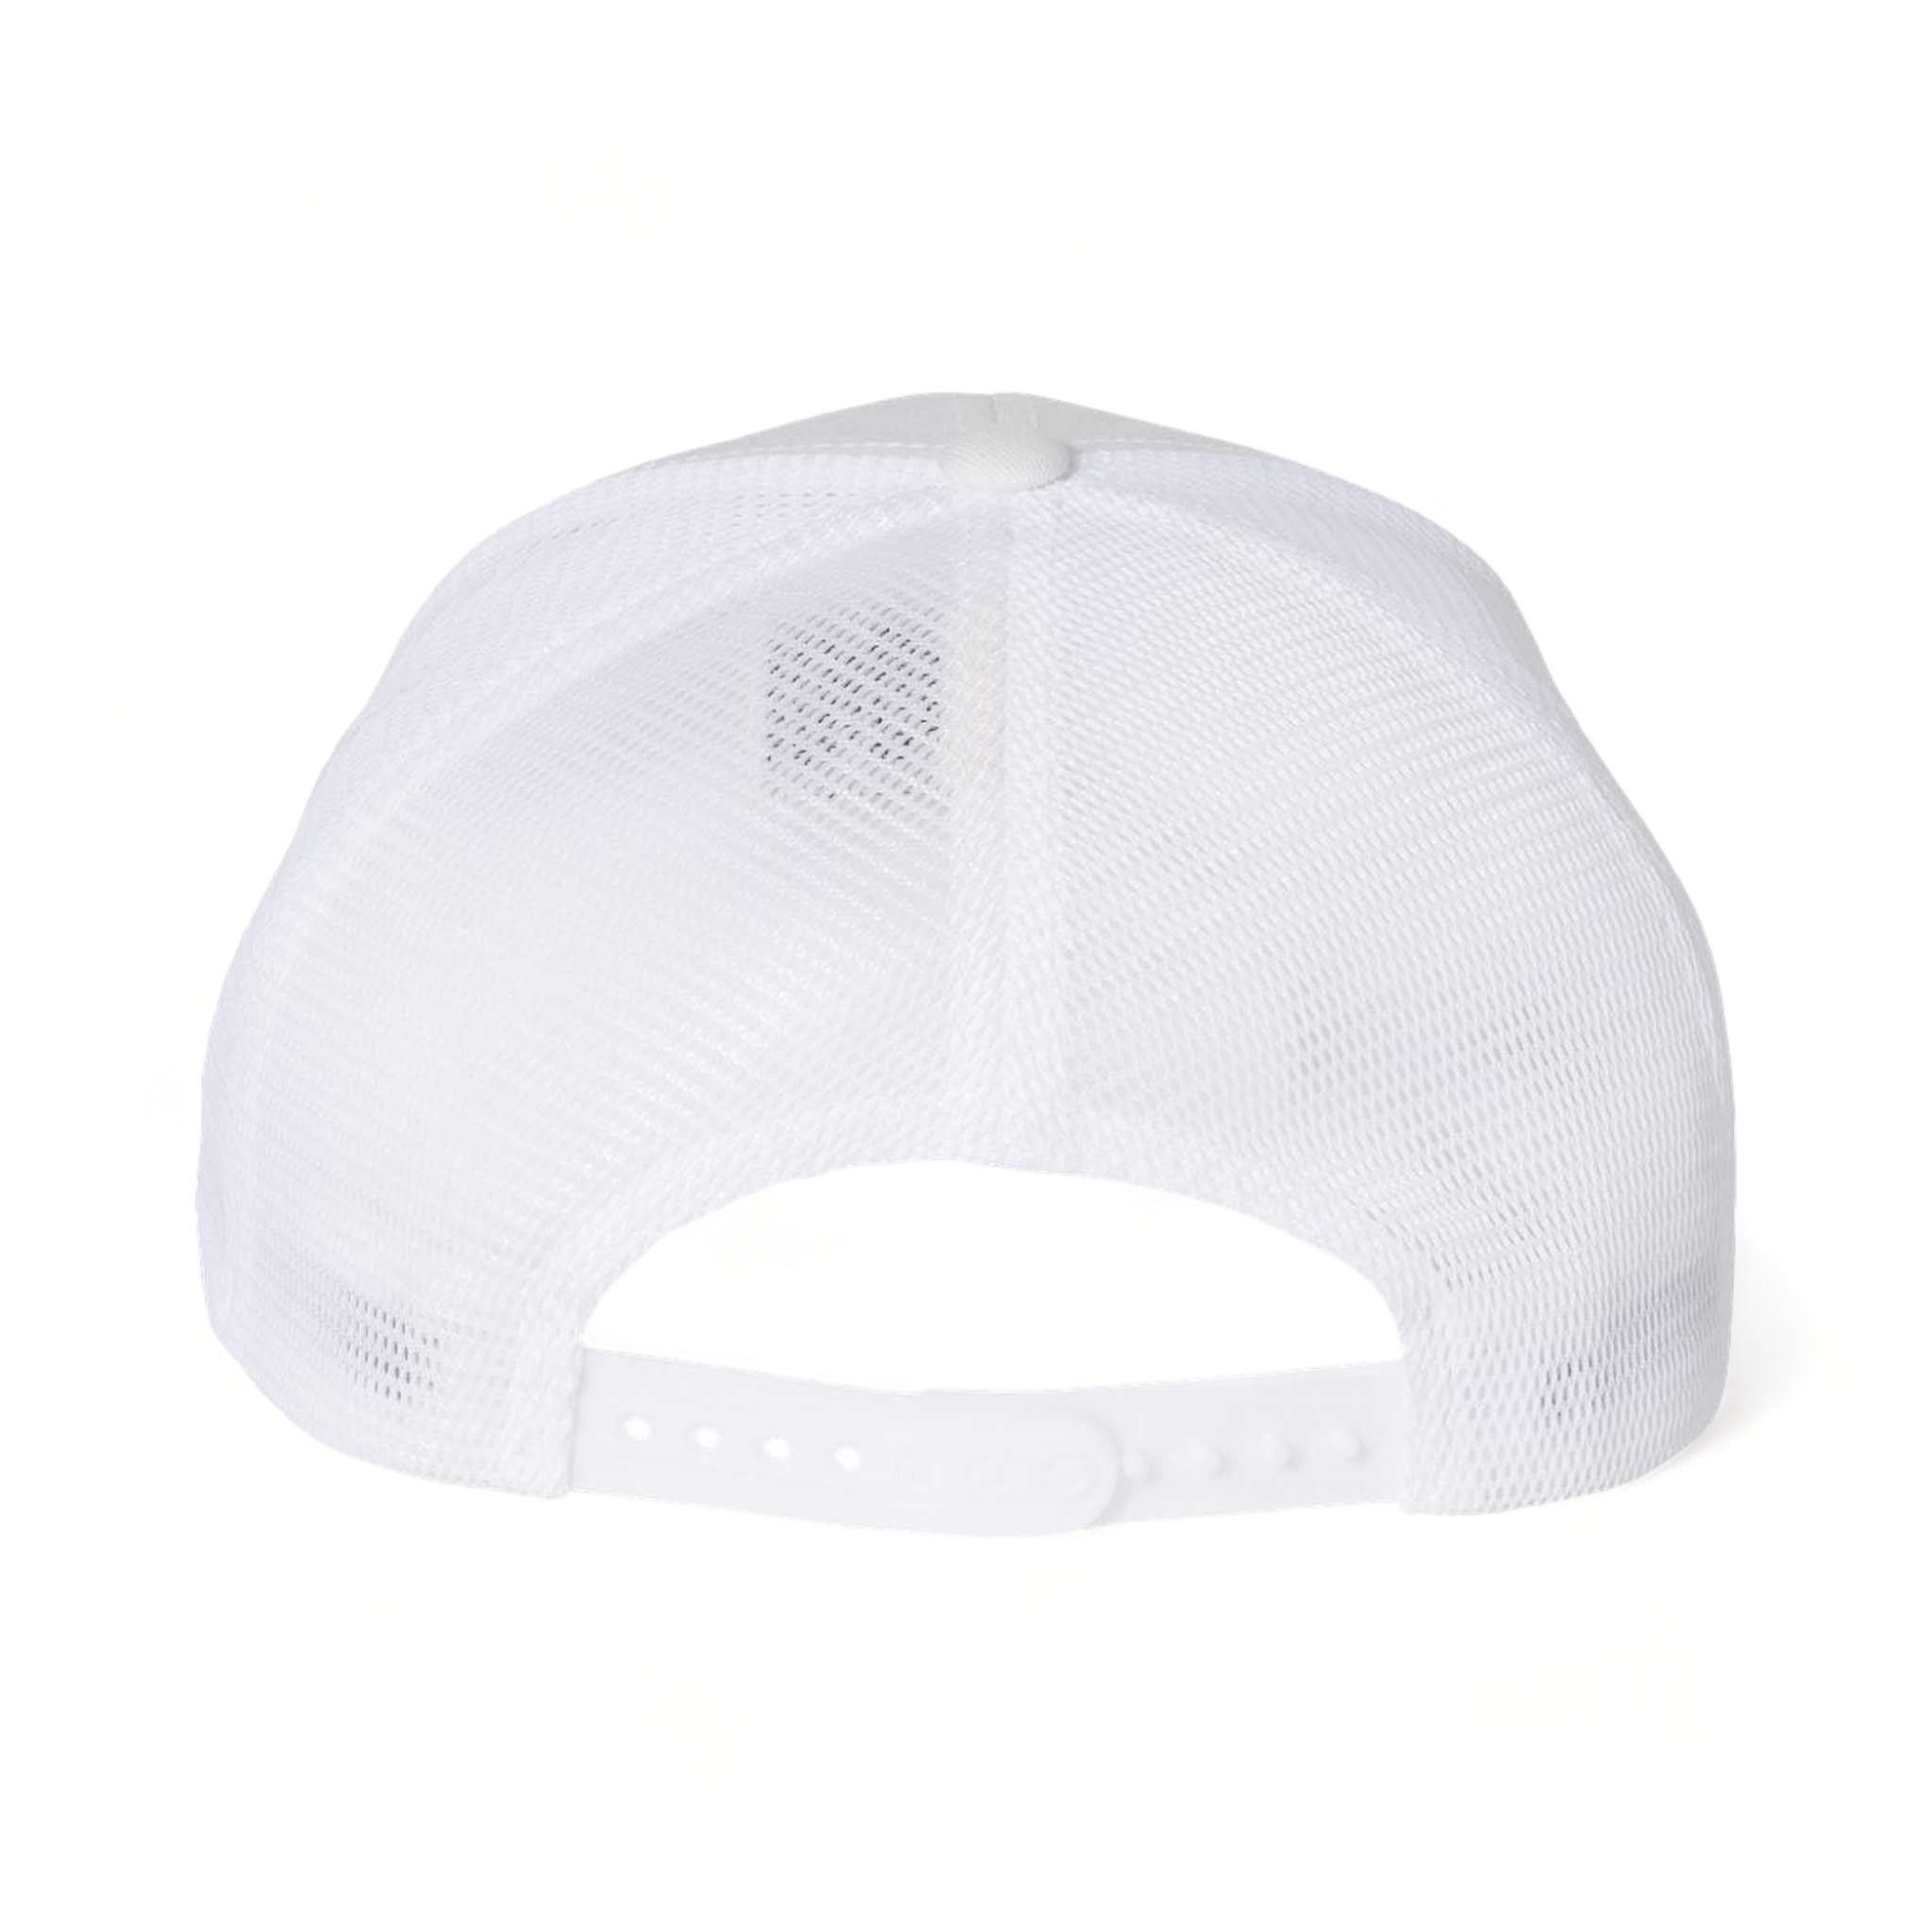 Back view of Flexfit 110M custom hat in white